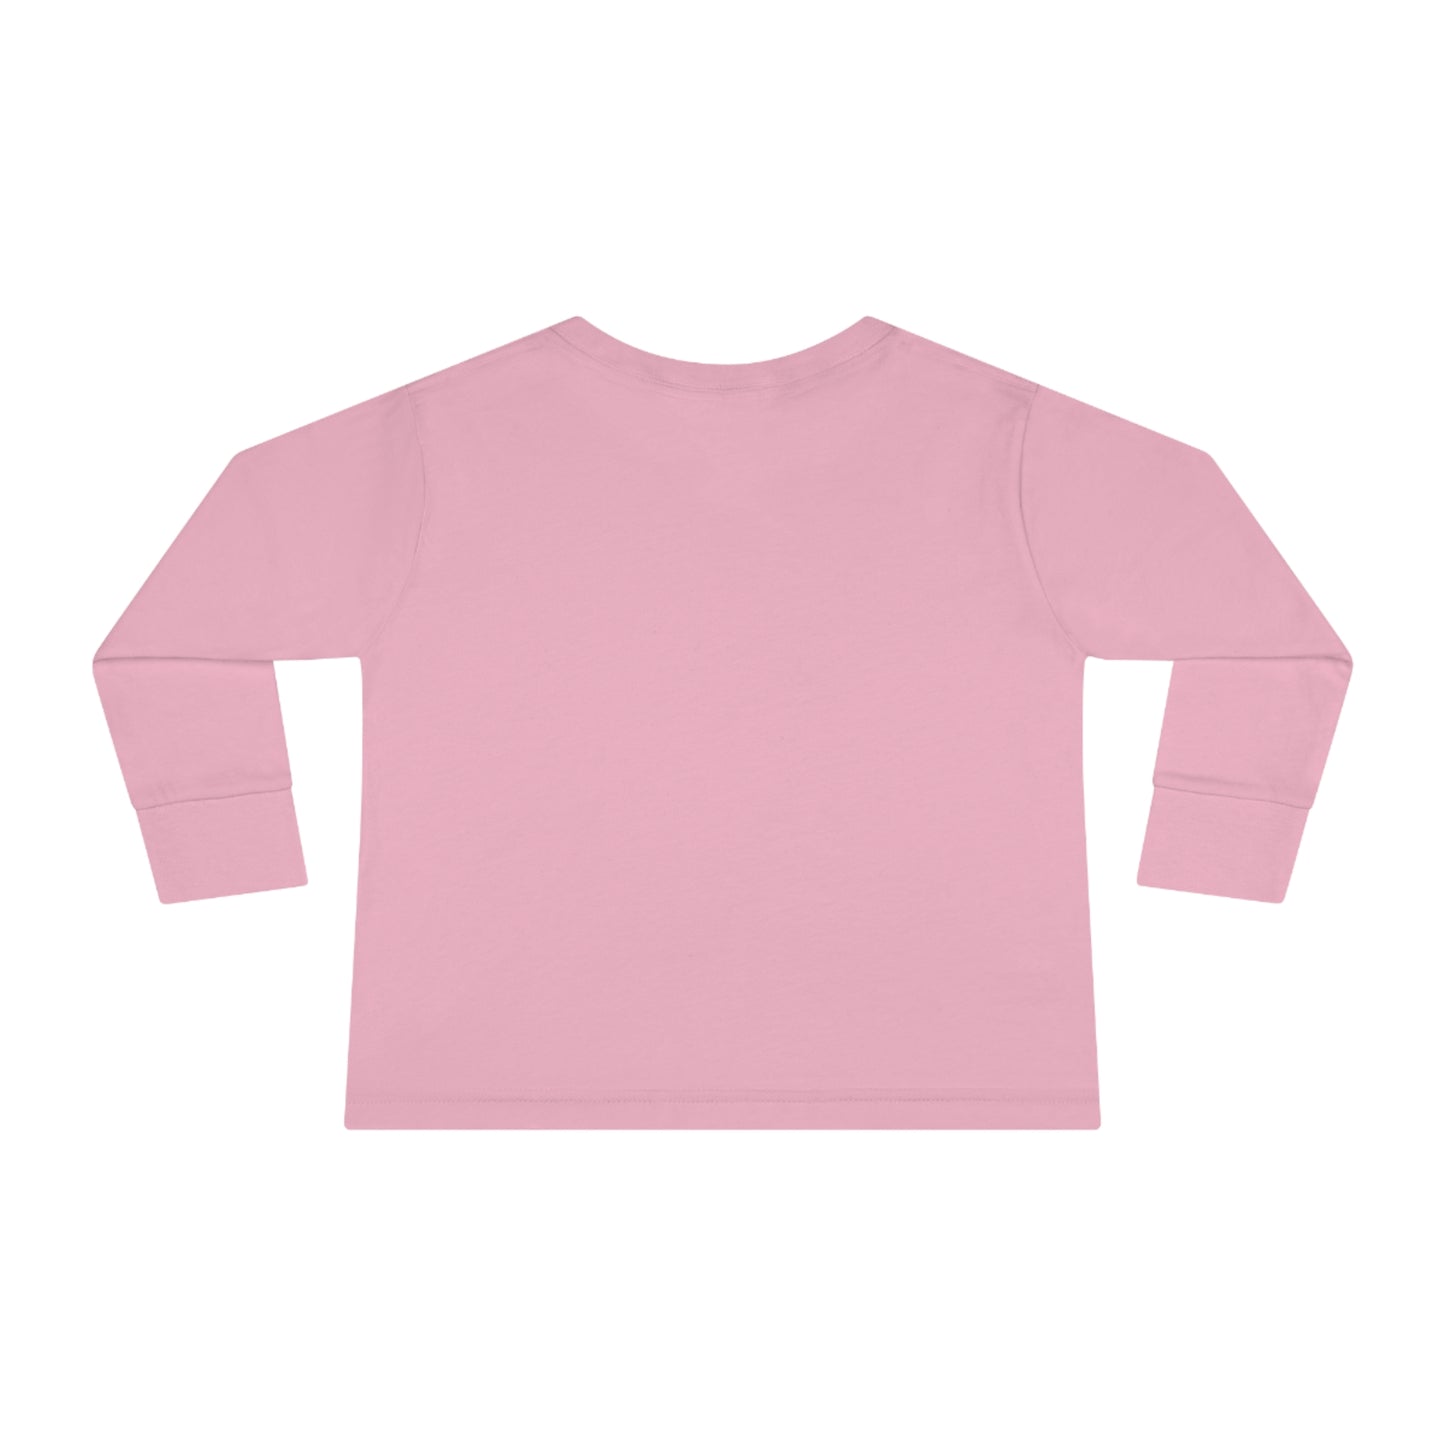 Girl Short Sleeve Tee, Girls Tee, Girls Shirt, Gift for Daughters, gift for girls For 10 Year Old